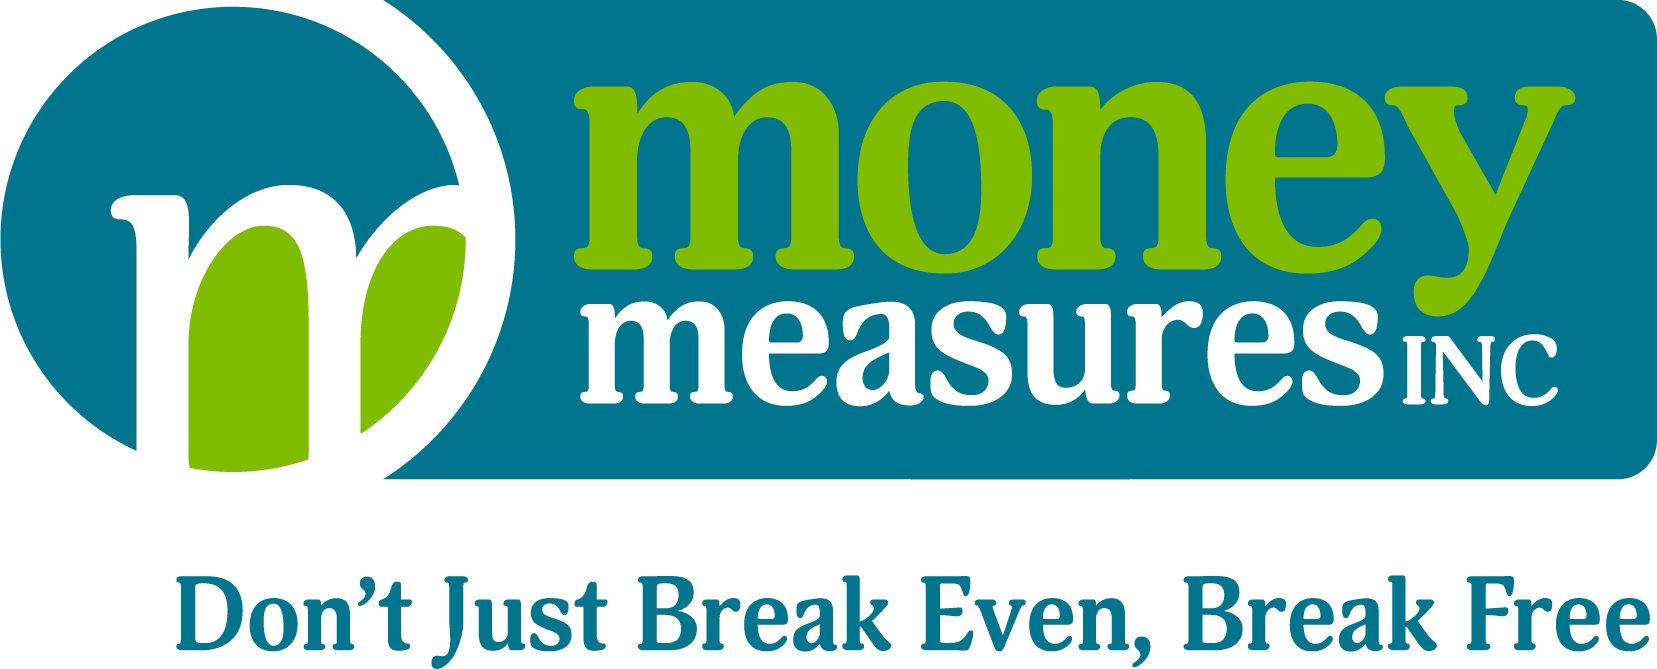 Money Measure Inc logo